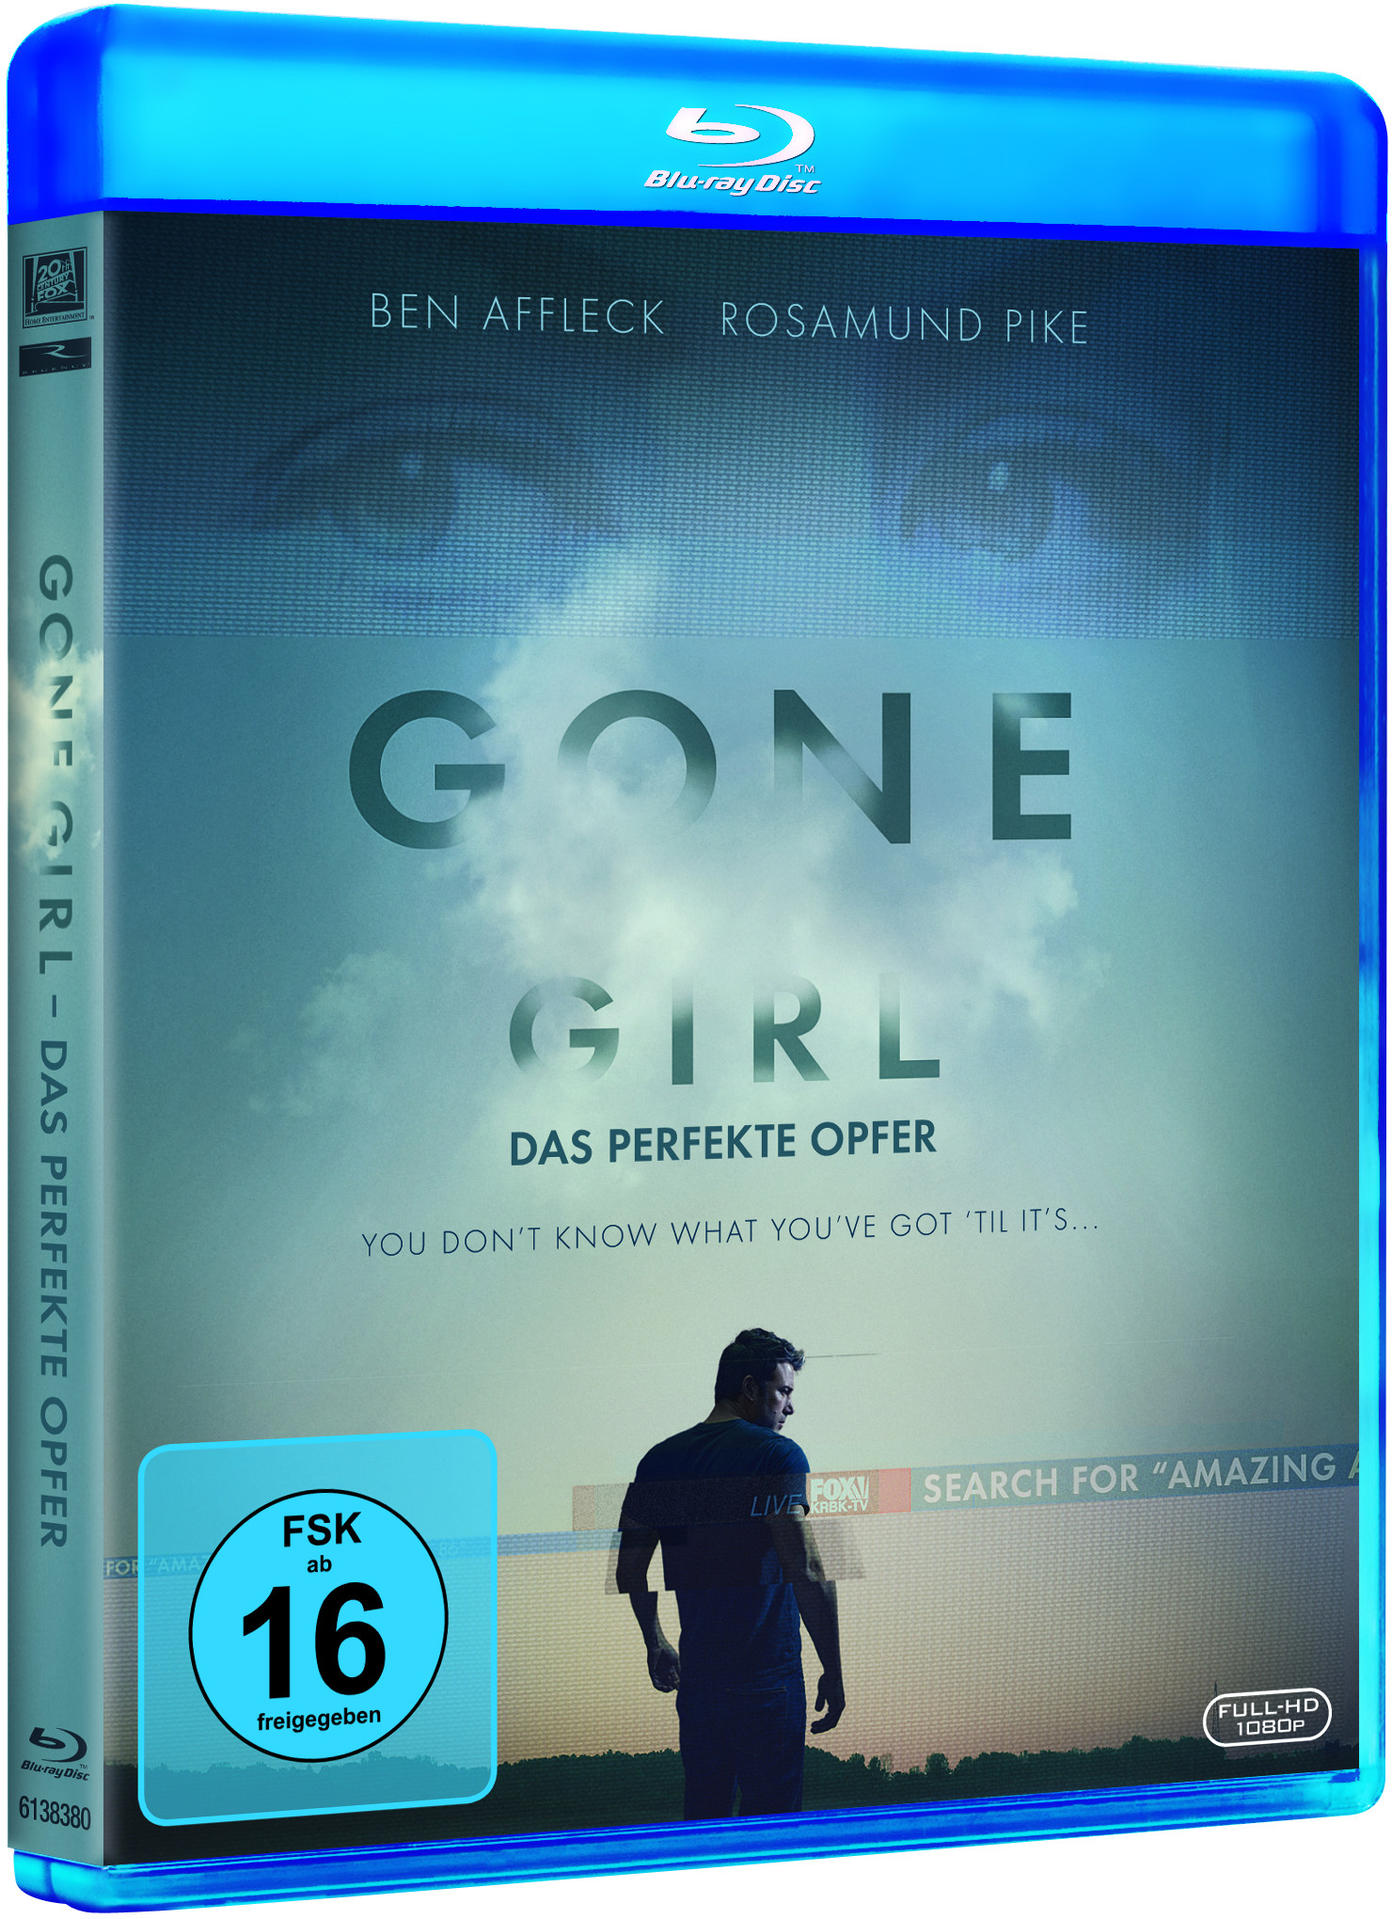 Blu-ray Opfer Girl perfekte - Das Gone